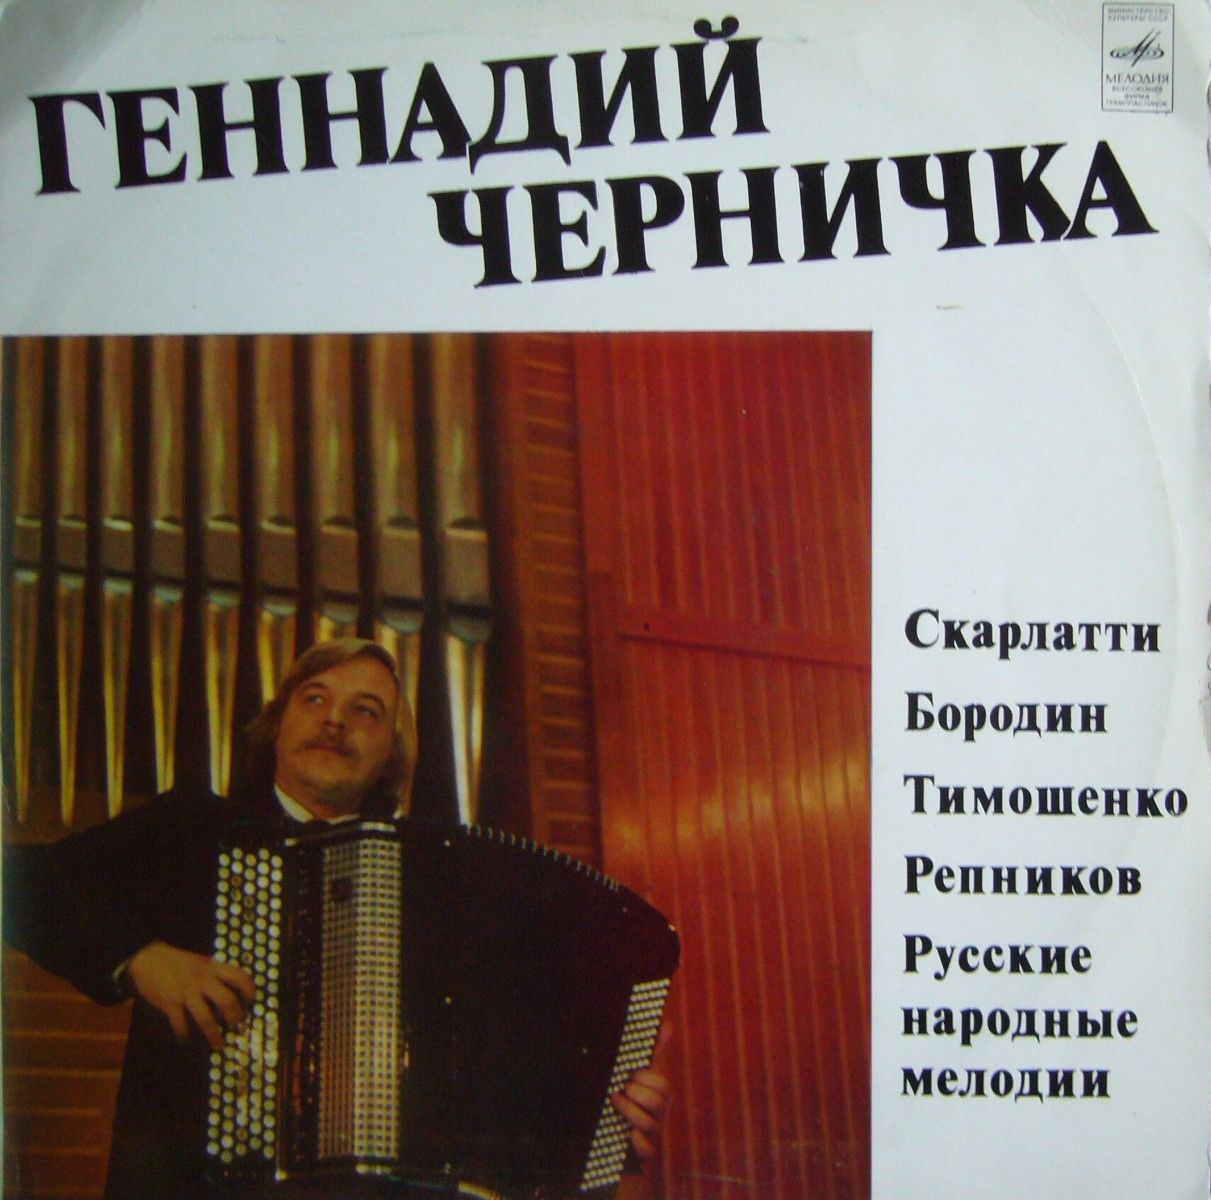 Геннадий Черничка (баян)